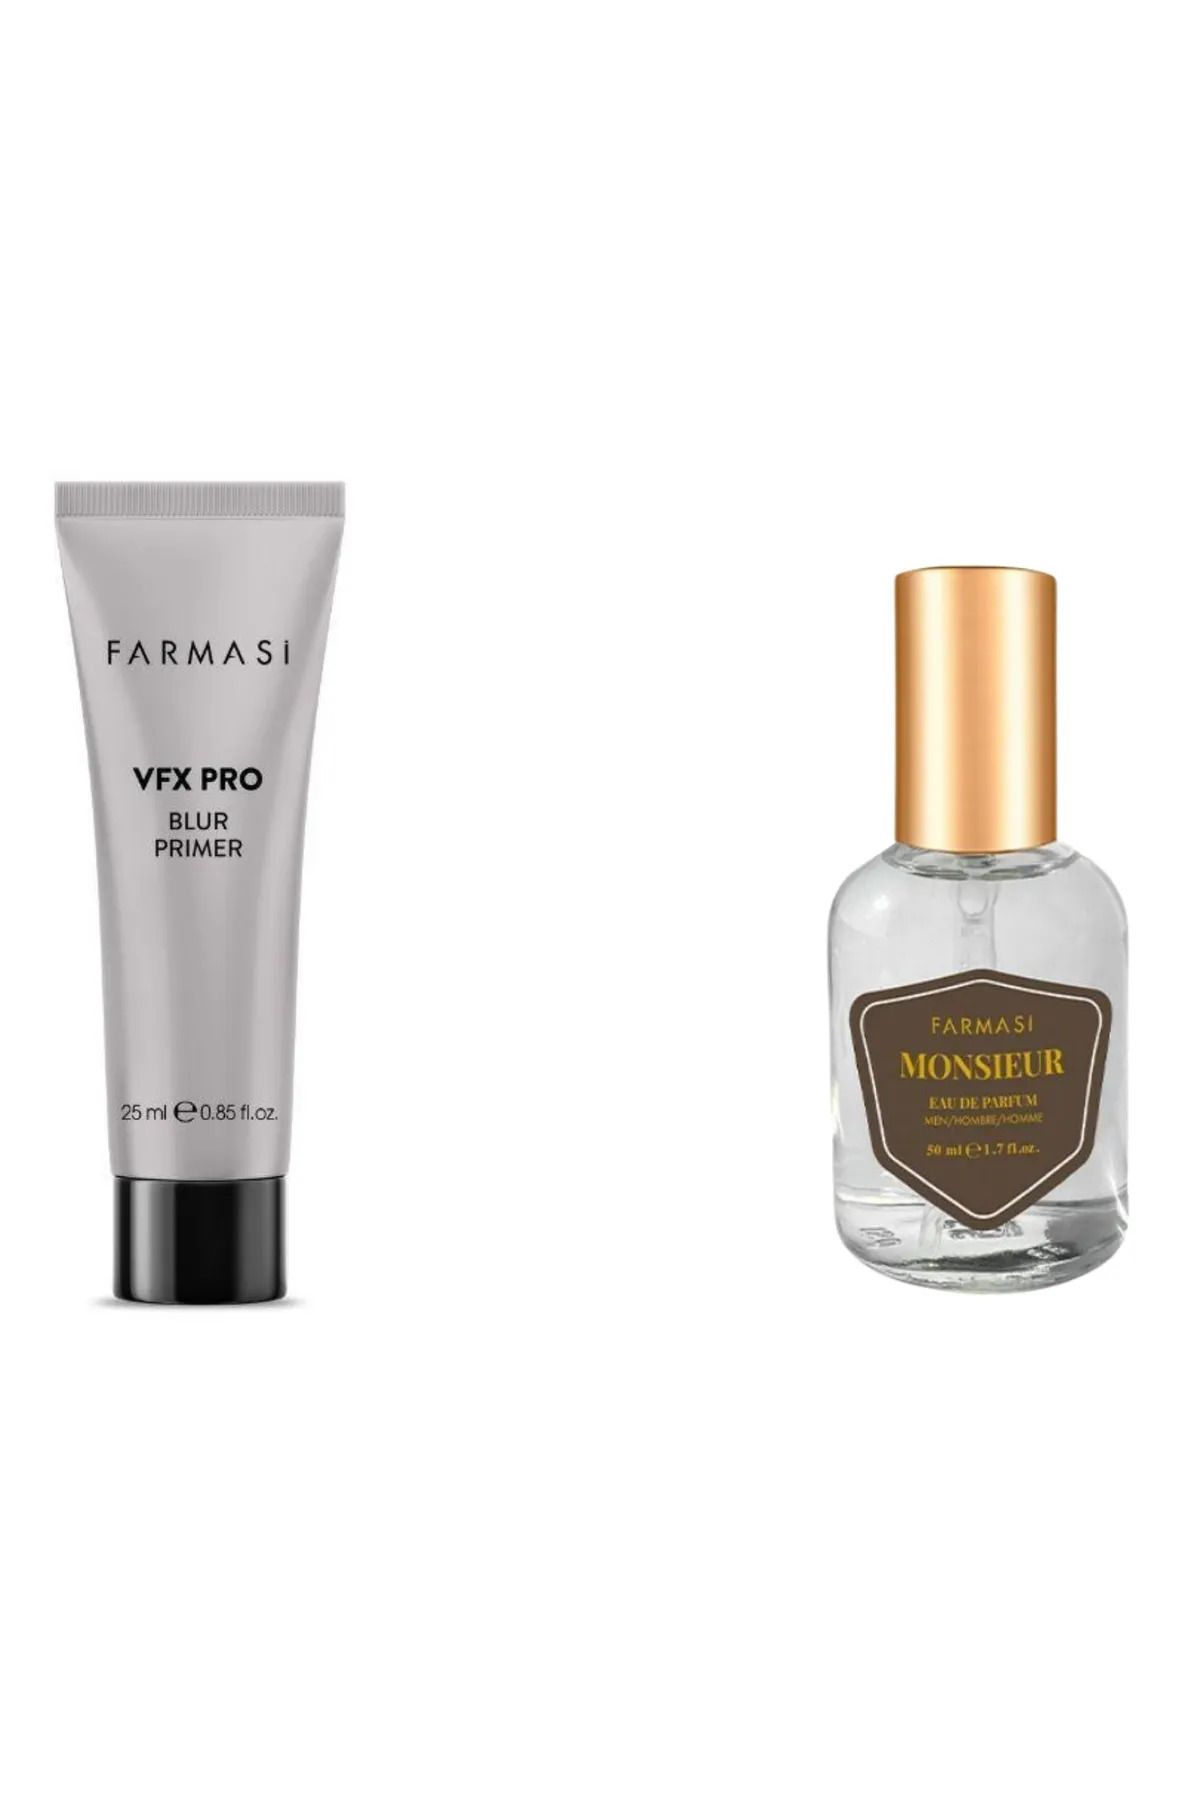 Farmasi Vfx Pro Blur Primer 25 ml Makyaj Bazı Yeni Paket Monsıeur Erkek Parfüm 50 ml